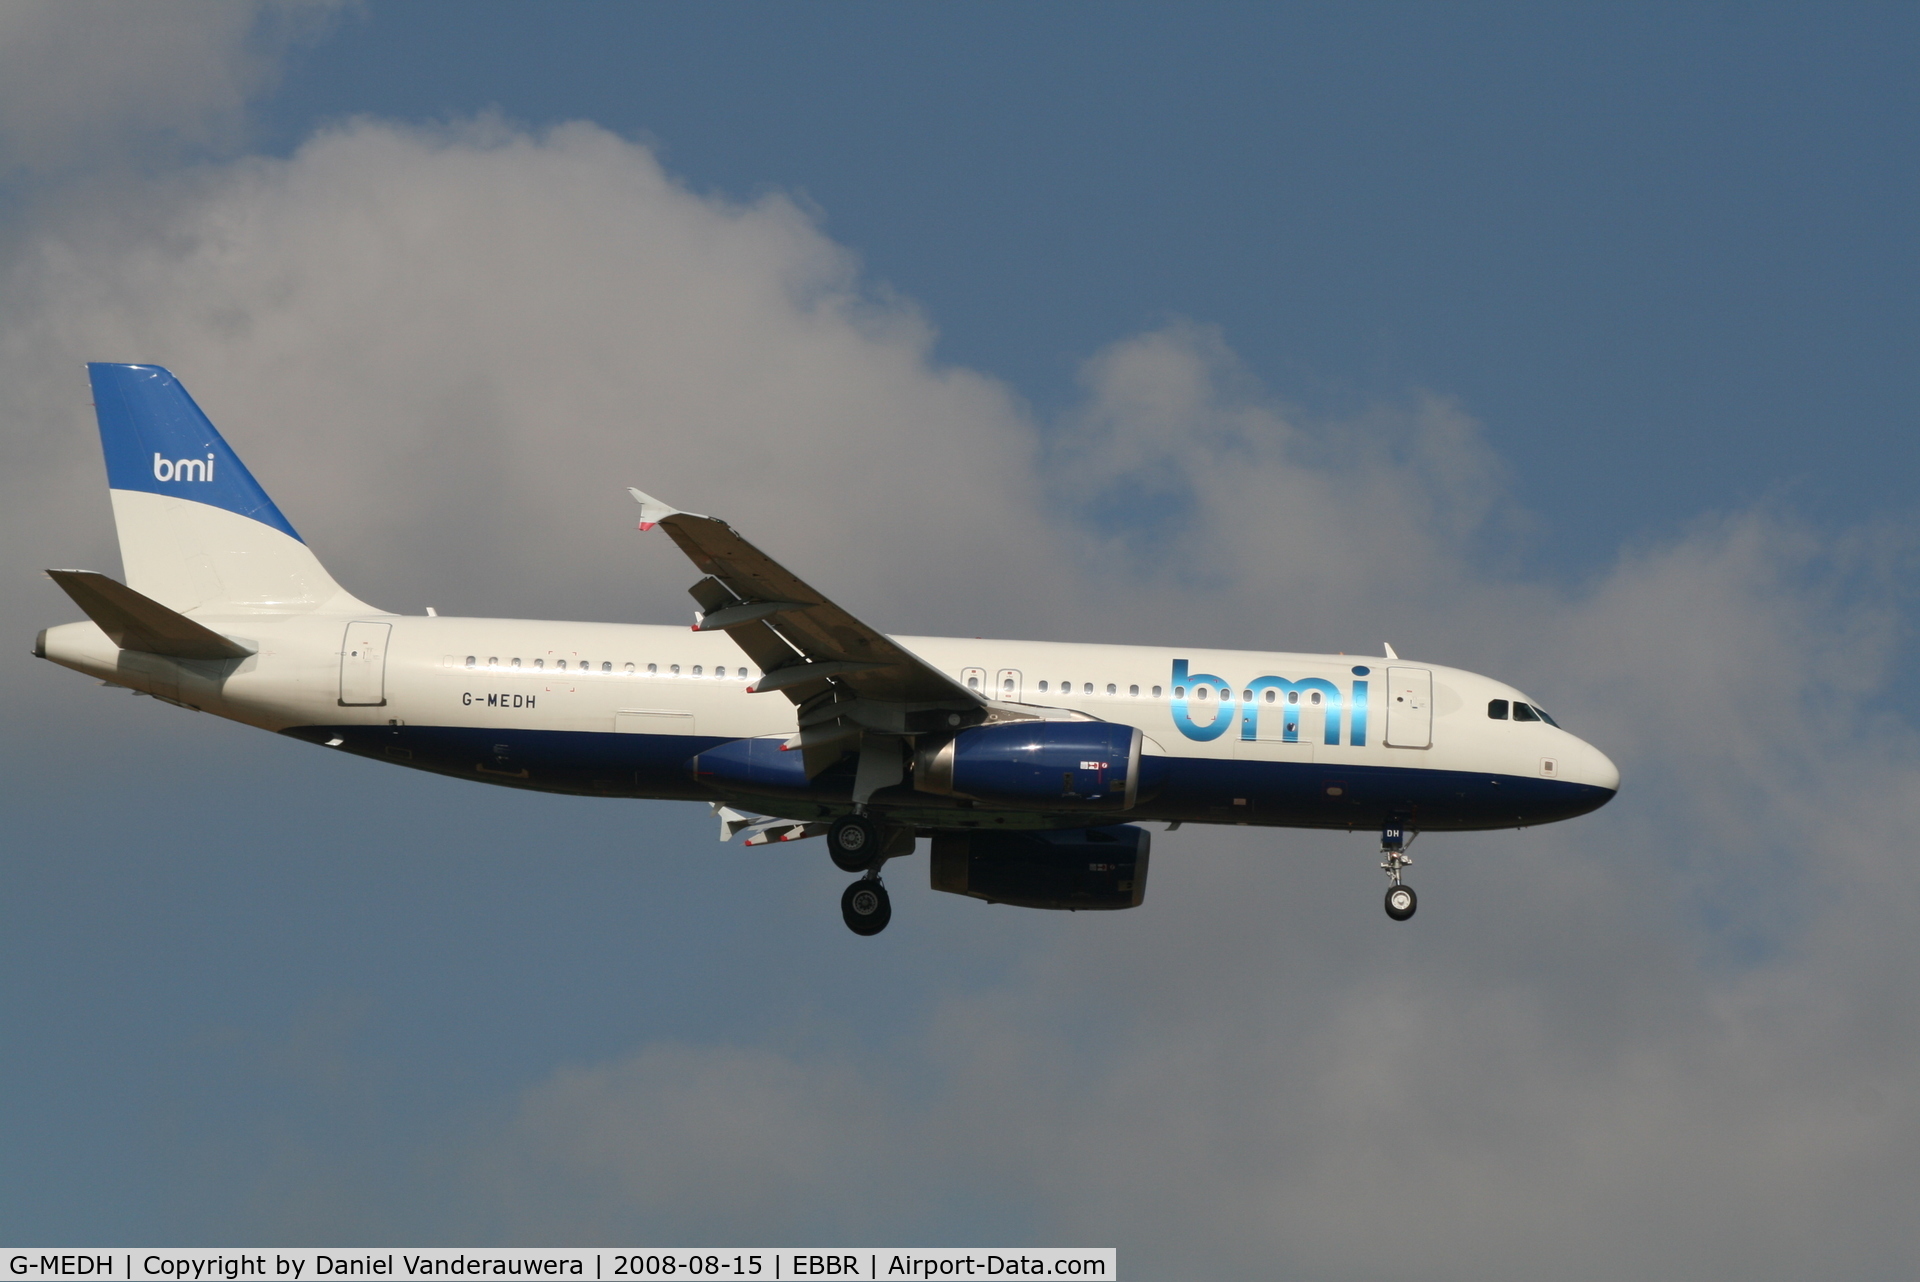 G-MEDH, 2003 Airbus A320-232 C/N 1922, arrival of flight BD145 to rwy 02